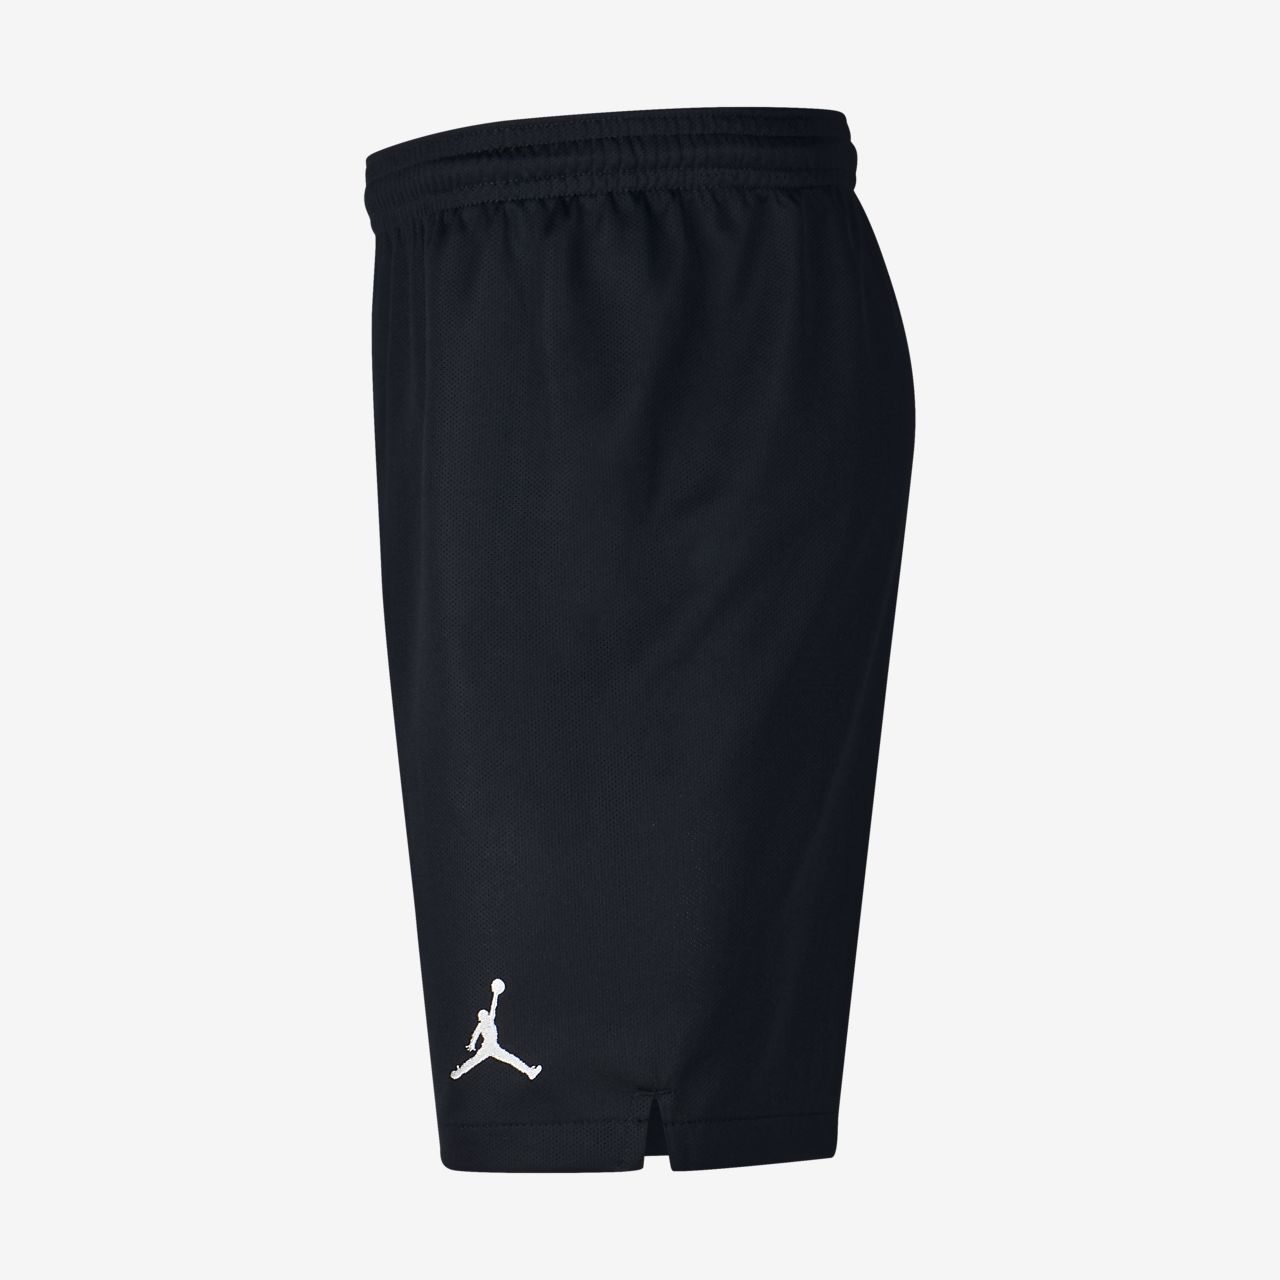 Jordan Paris Saint Germain Shorts Hot Sale, UP TO 64% OFF | www 